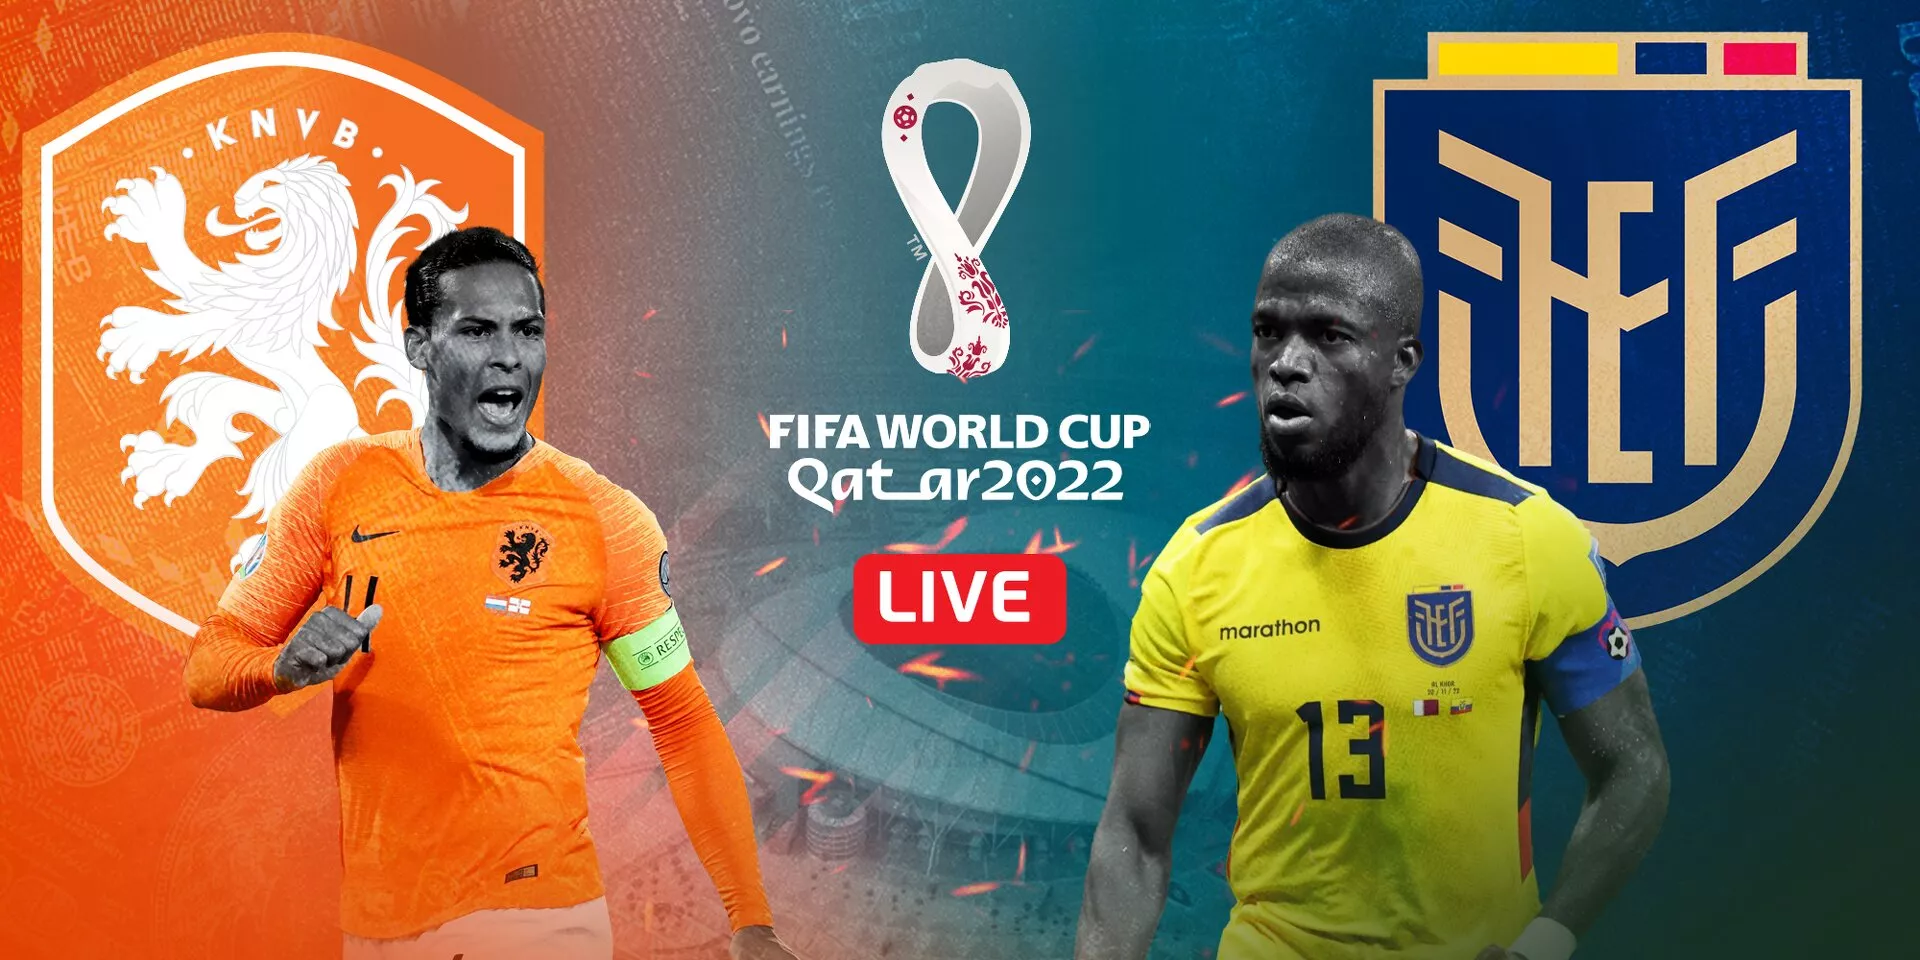 FIFA World Cup 2022 Netherlands 1-1 Ecuador Replay